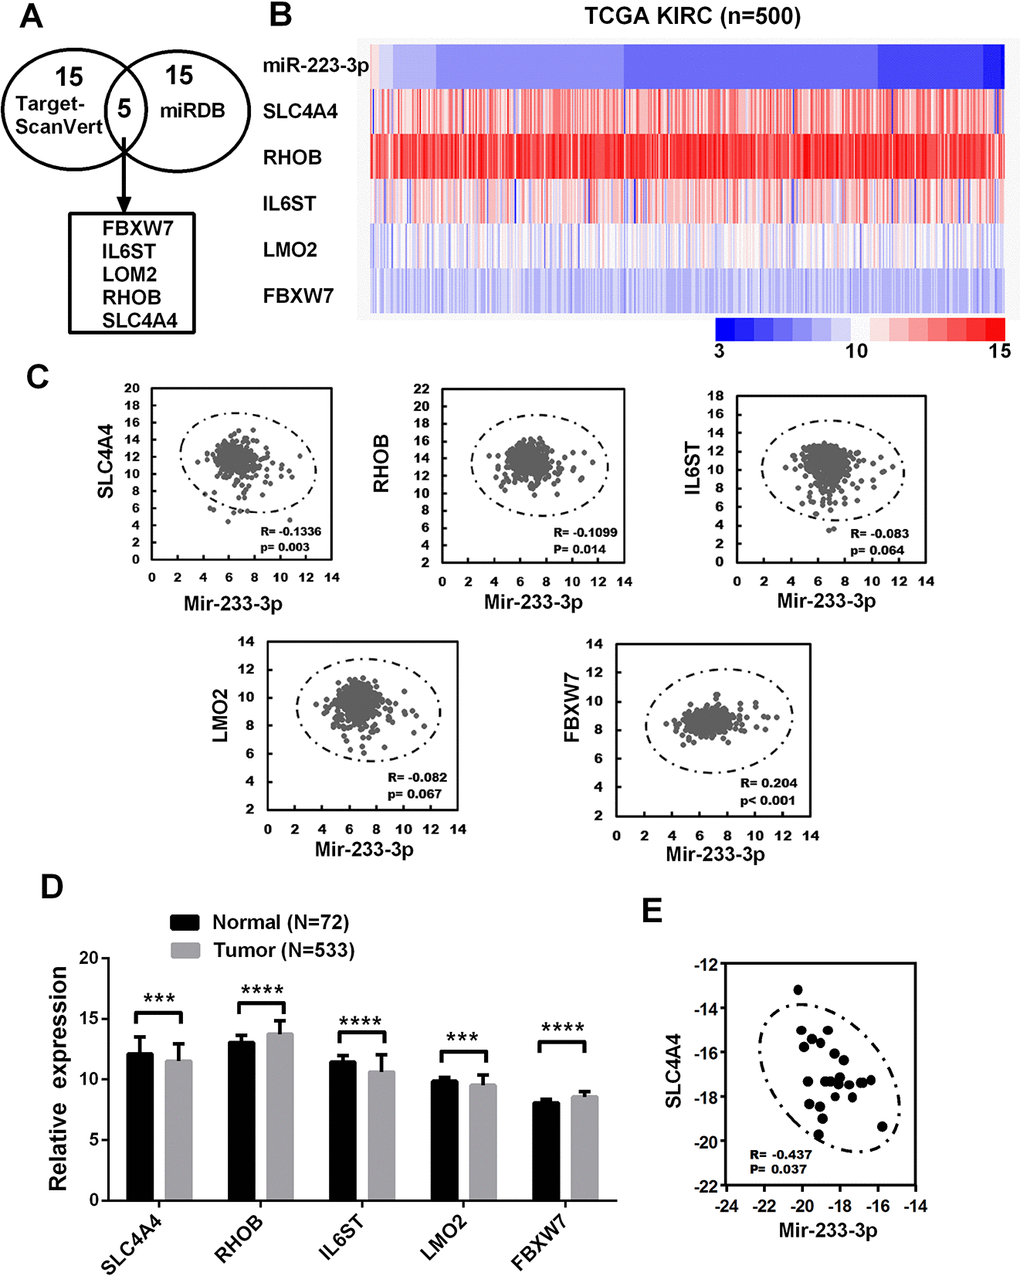 Bioinformatic analysis of miR-223-3p target genes in ccRCC